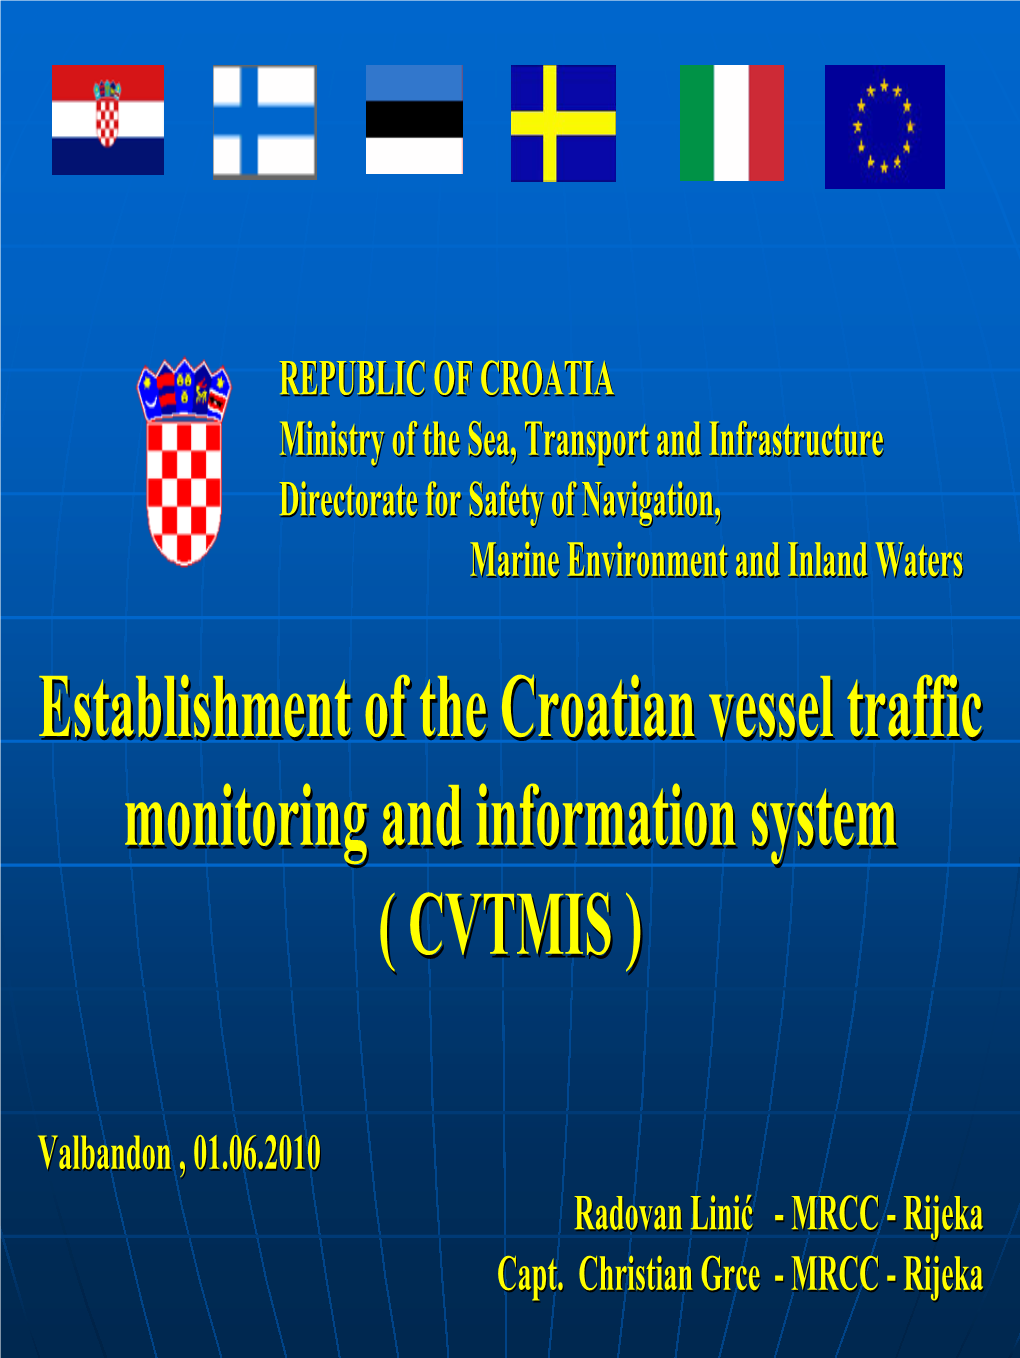 Establishment of the Croatian Vessel Traffic Monitoring and Information